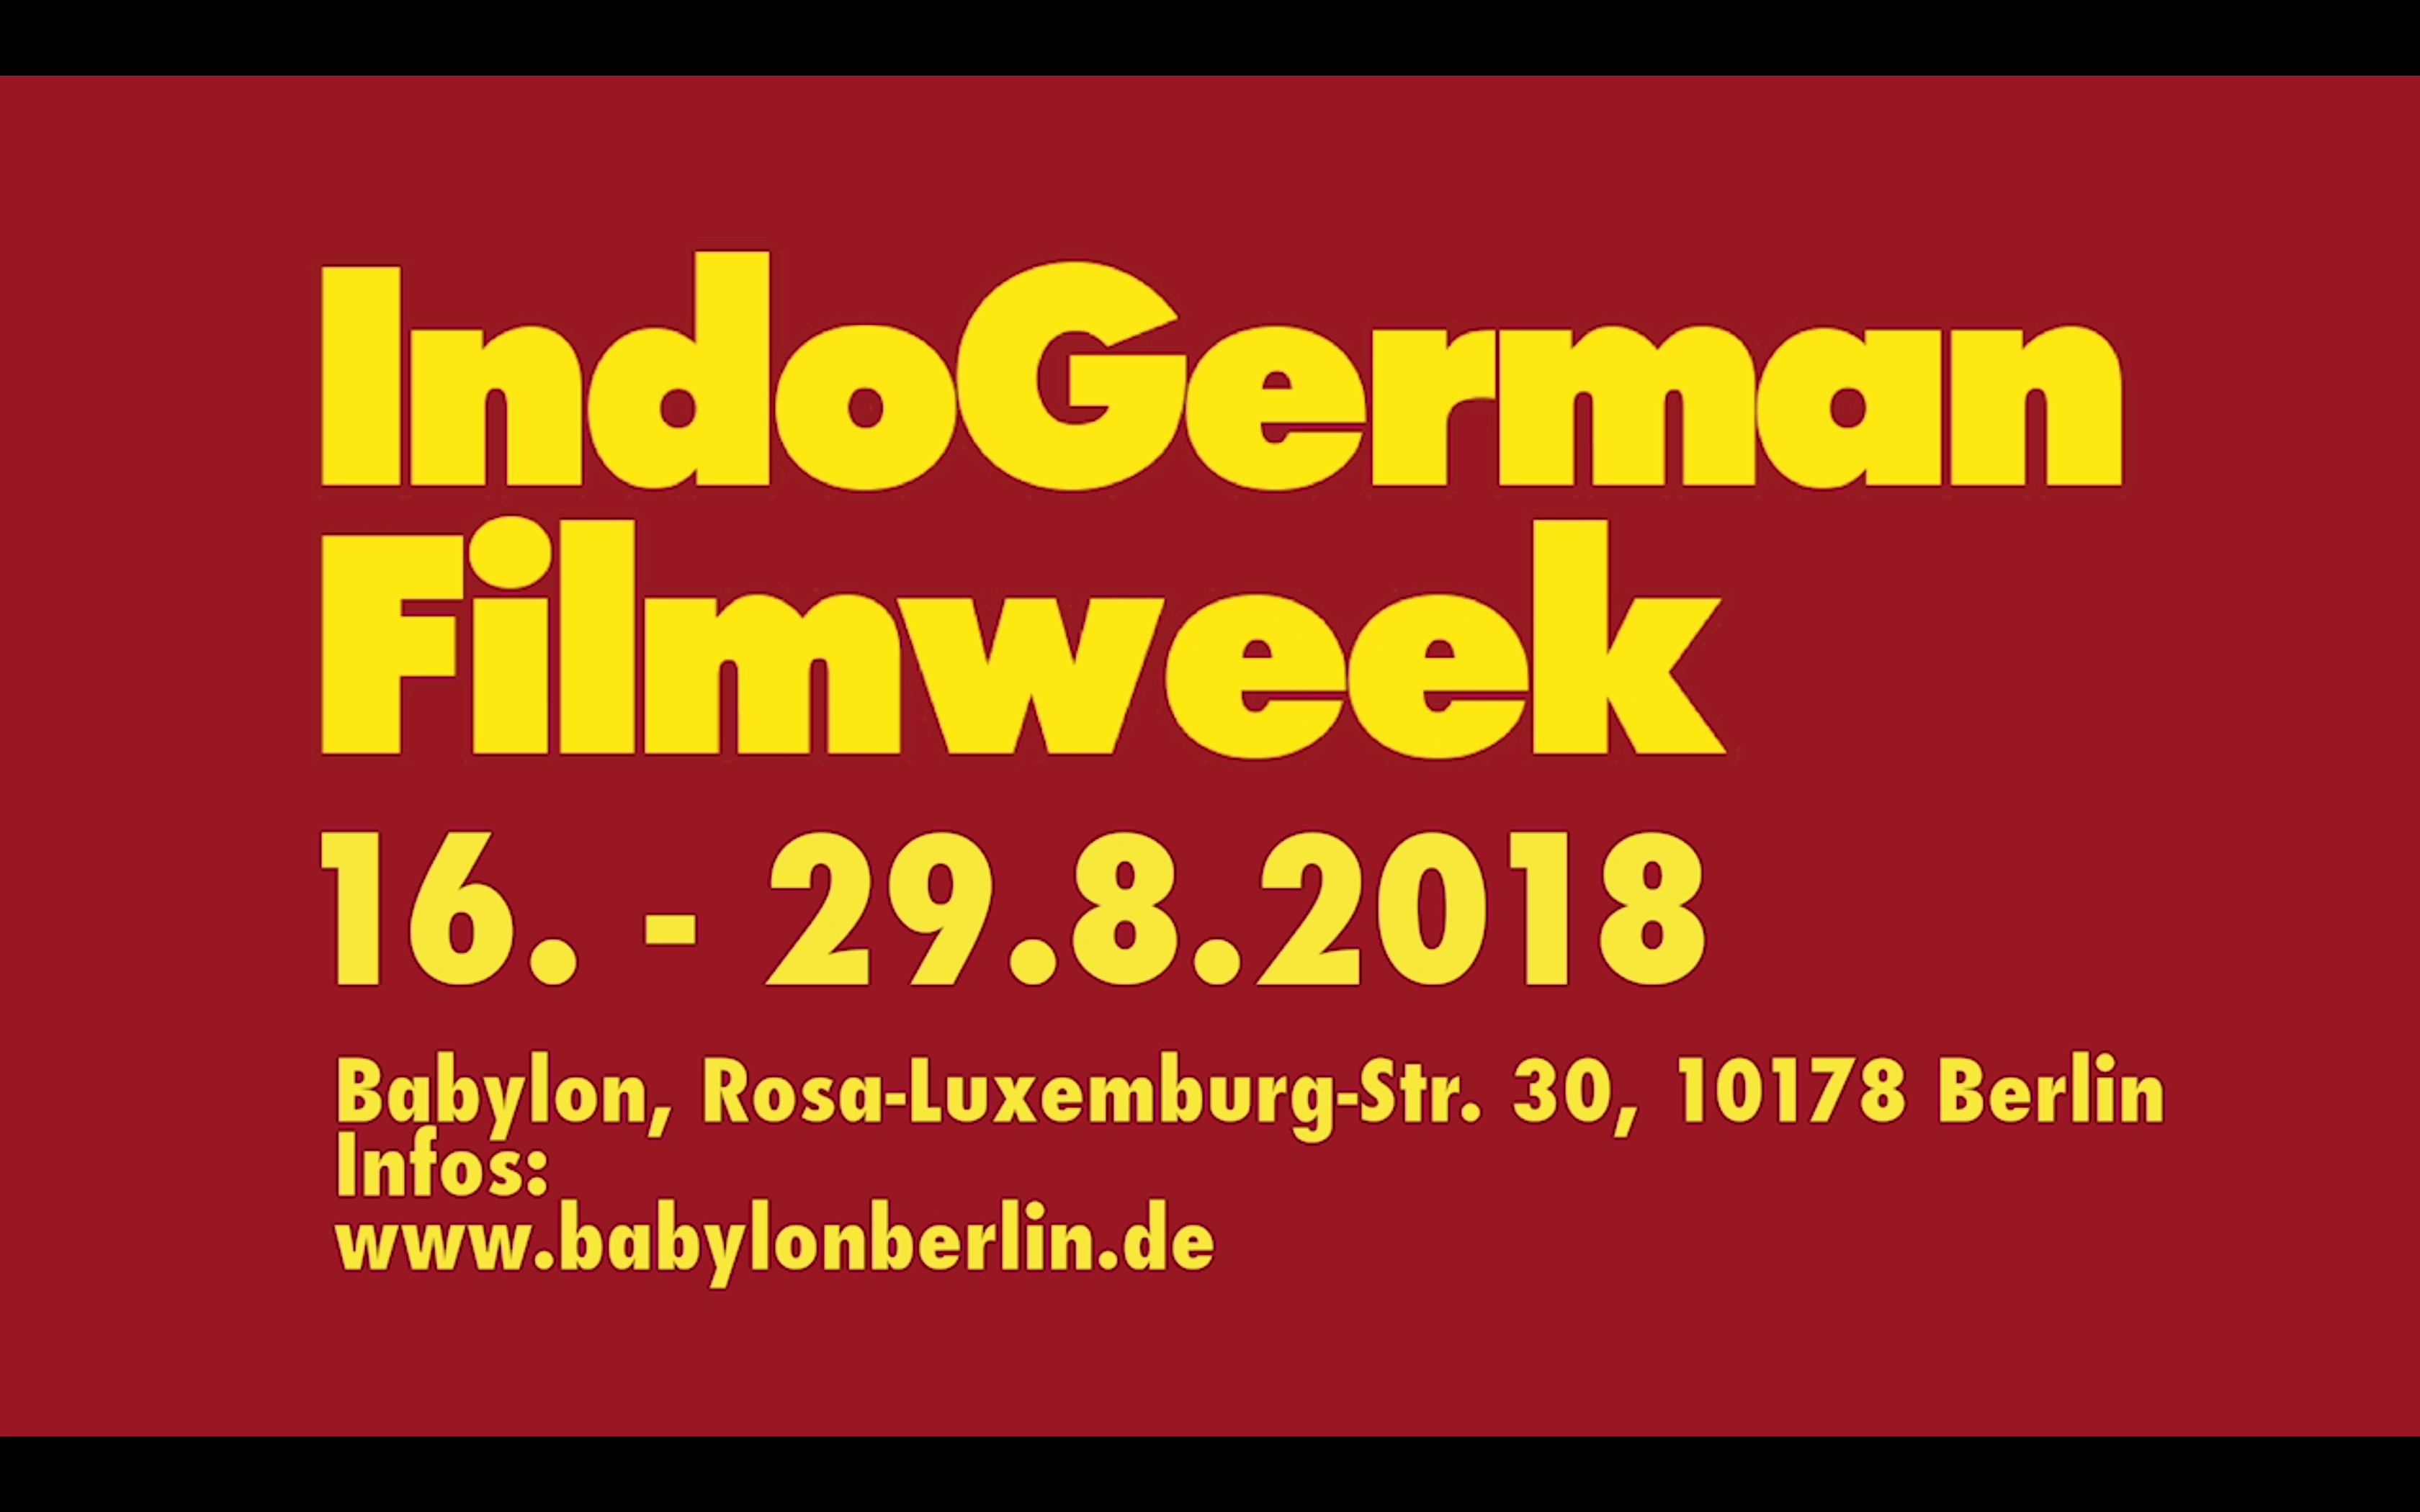 IndoGerman Filmweek Trailer 2018 (short version)